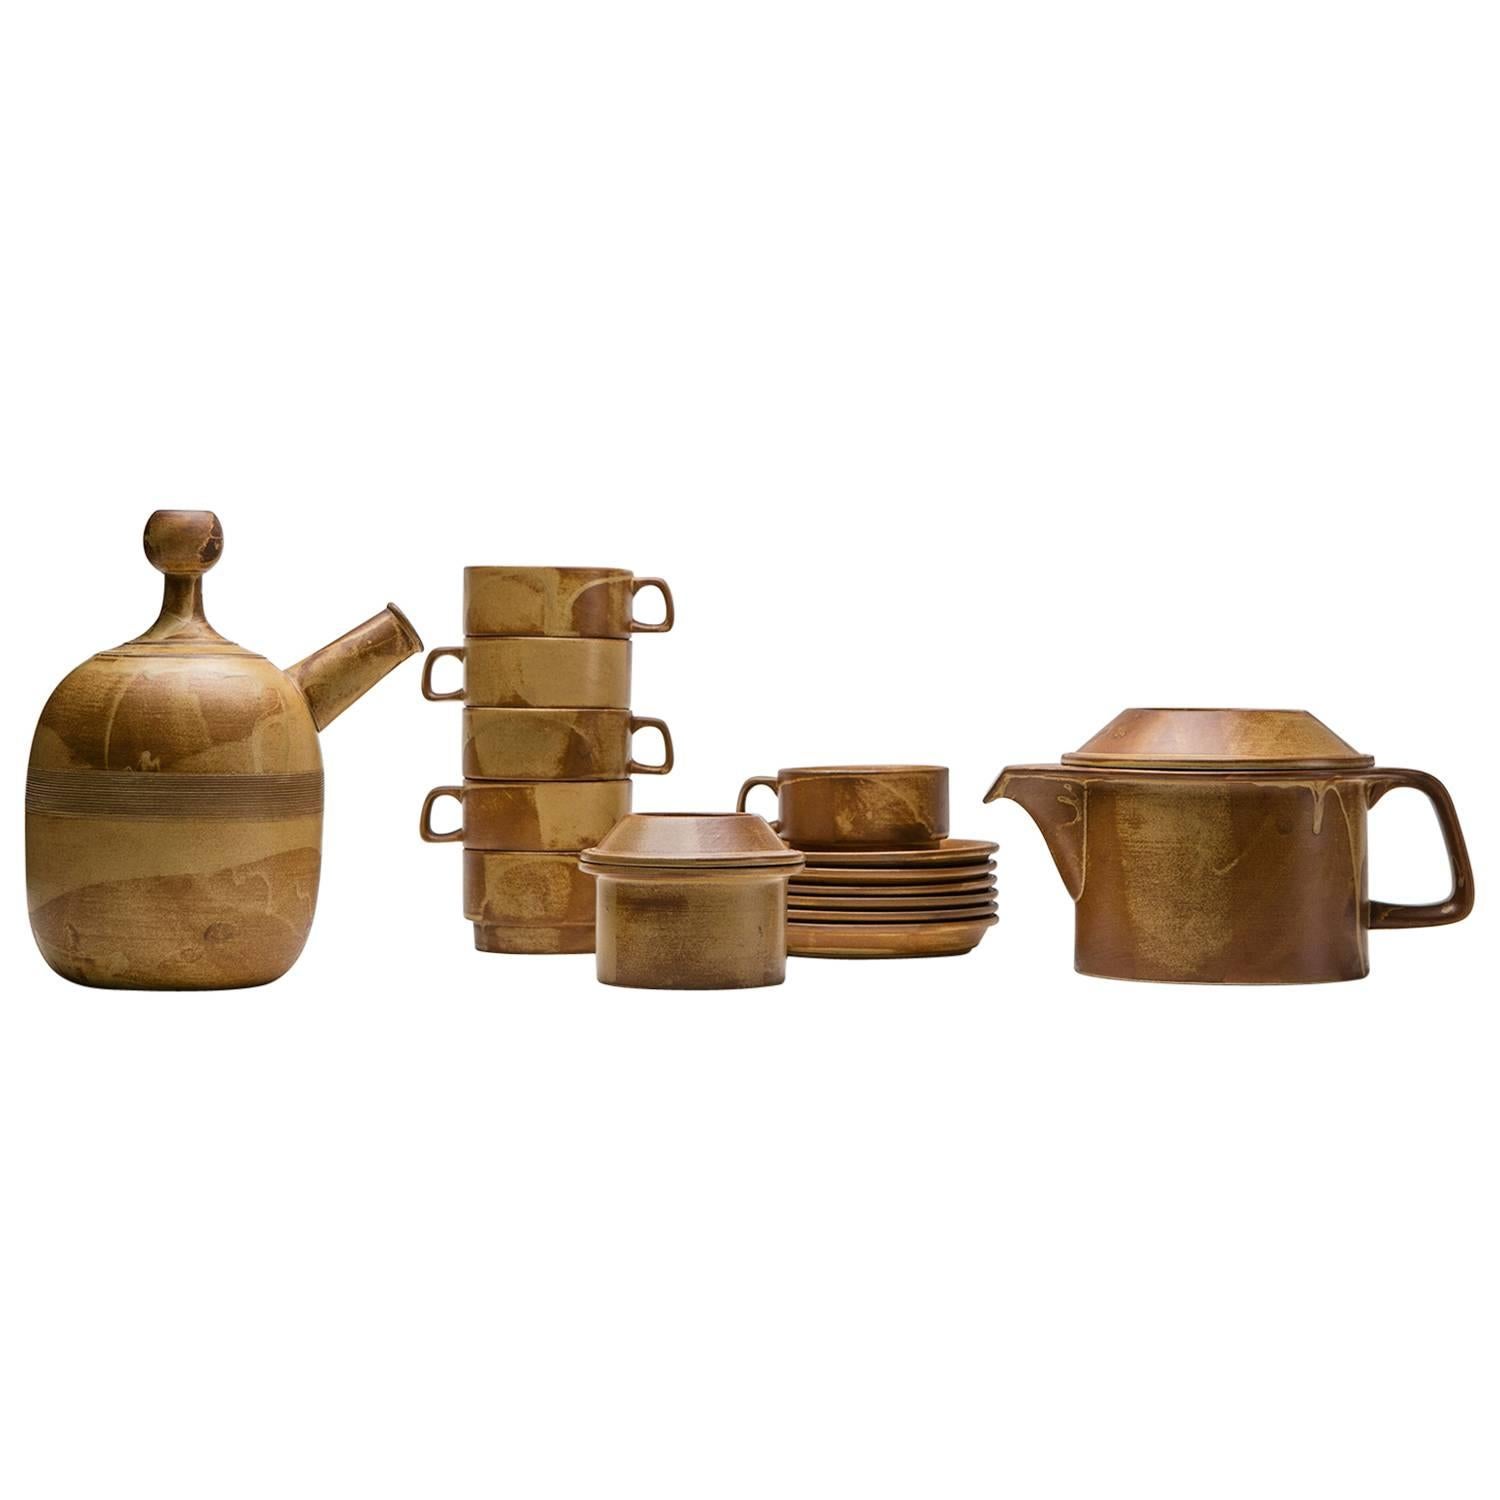 Keramik-Teeservice „Compact“ von Ambrogio Pozzi für Ceramica Franco Pozzi, 1960er Jahre im Angebot